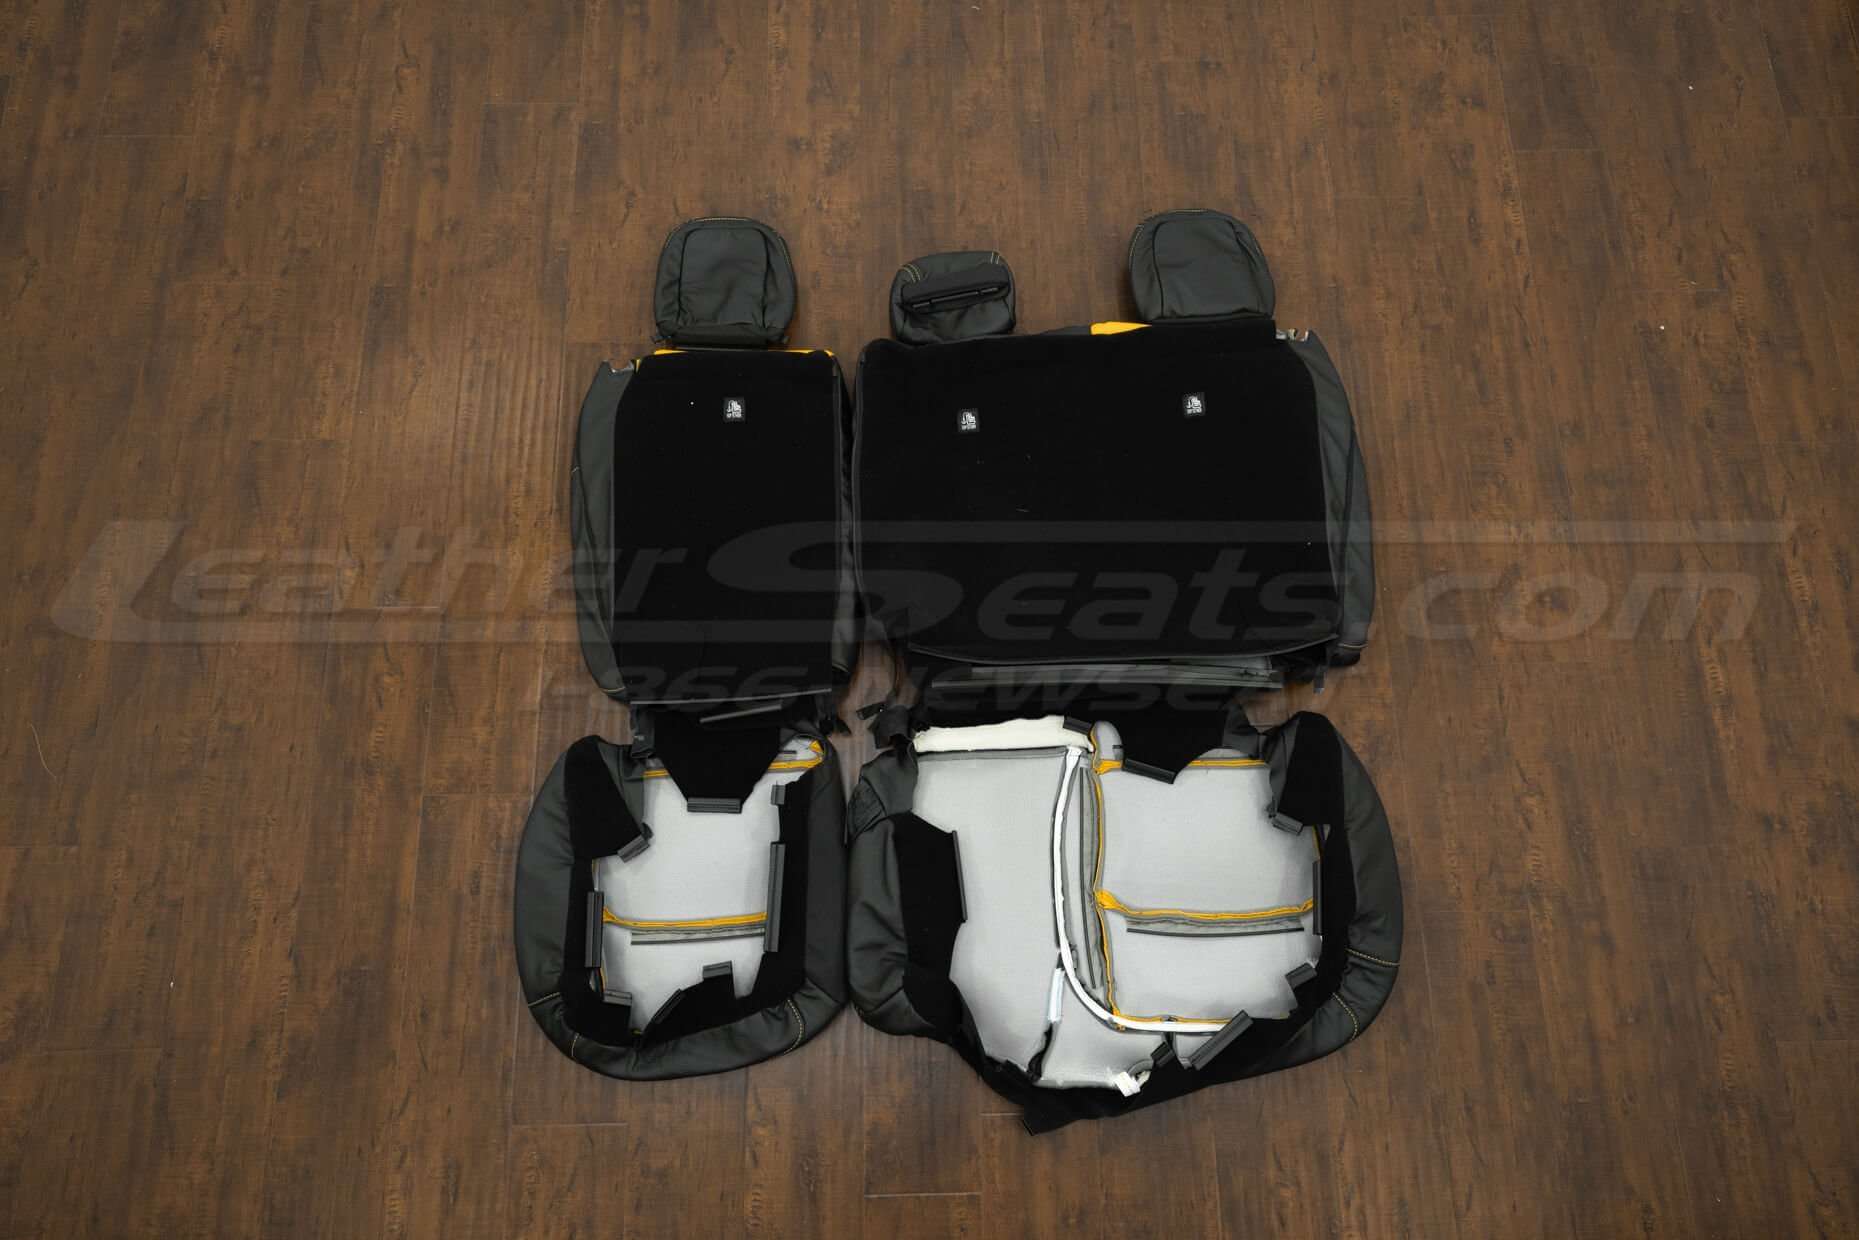 2018-2021 Jeep Wrangler Upholstery kit - Black & Velocity Yellow - Back view of rear seats